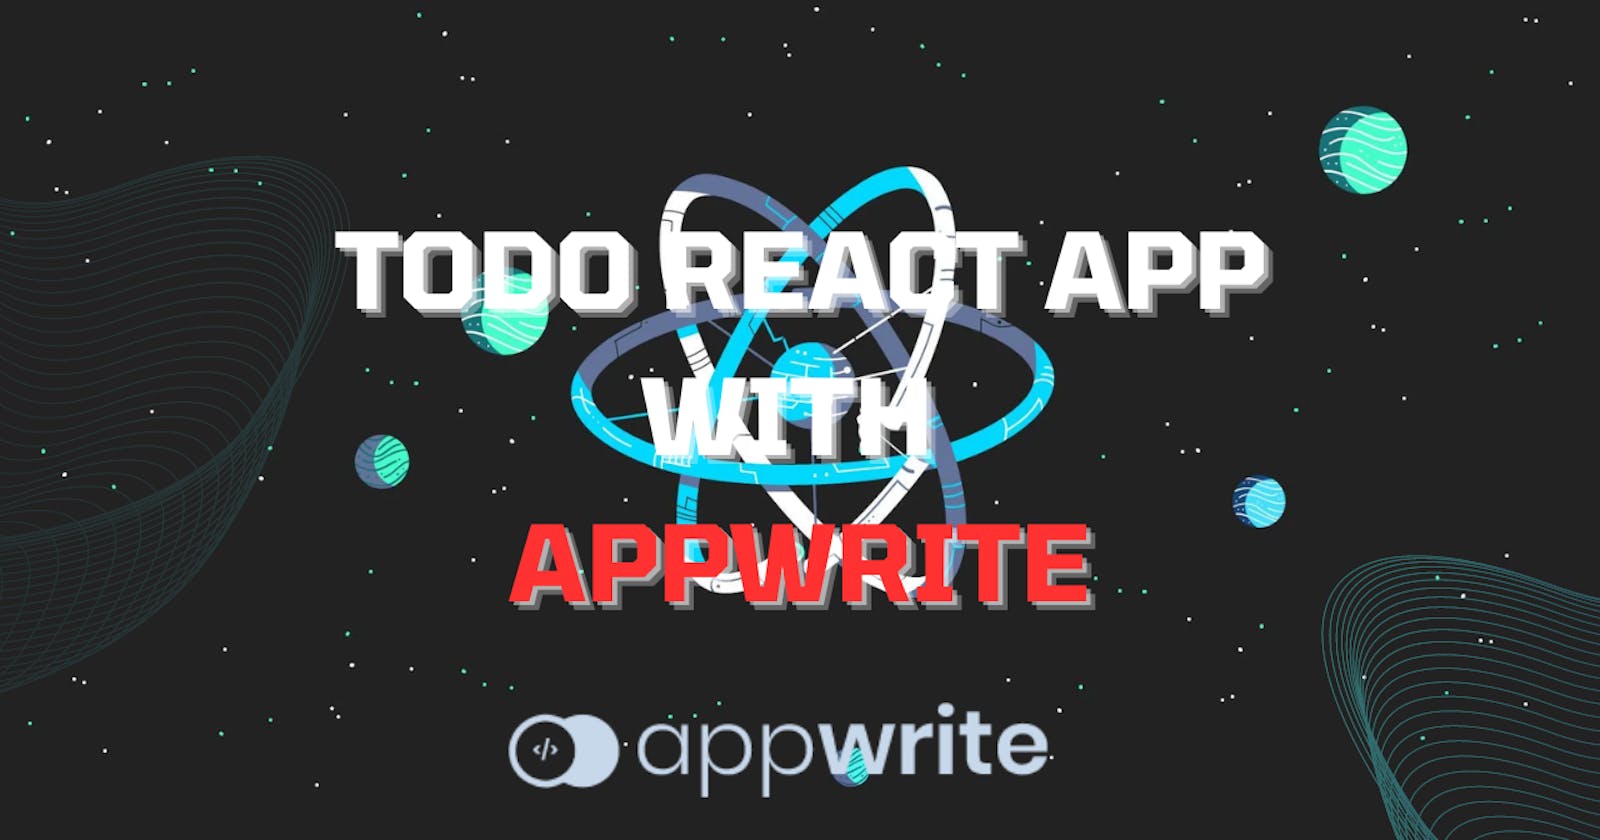 DoIT - A ToDo React App with Appwrite